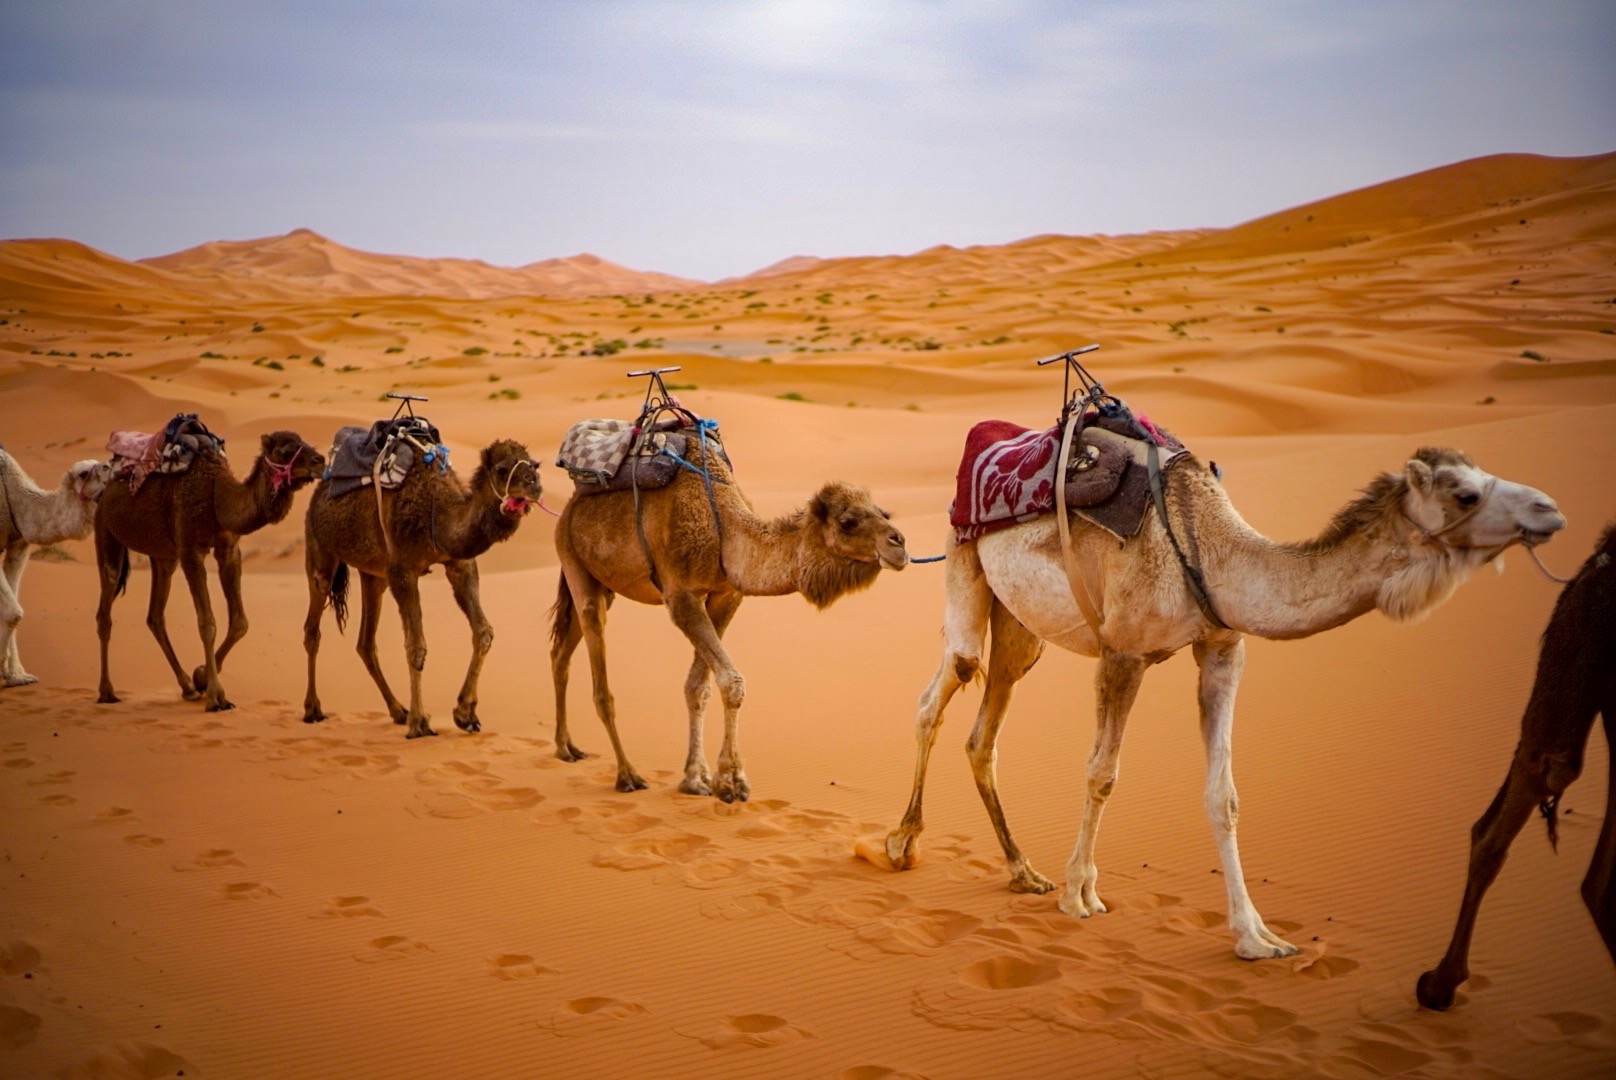 Караван картинка. Марокко пустыня Караваны. Двугорбые Верблюды Караван. Караван марокканских верблюдов дромедаров.